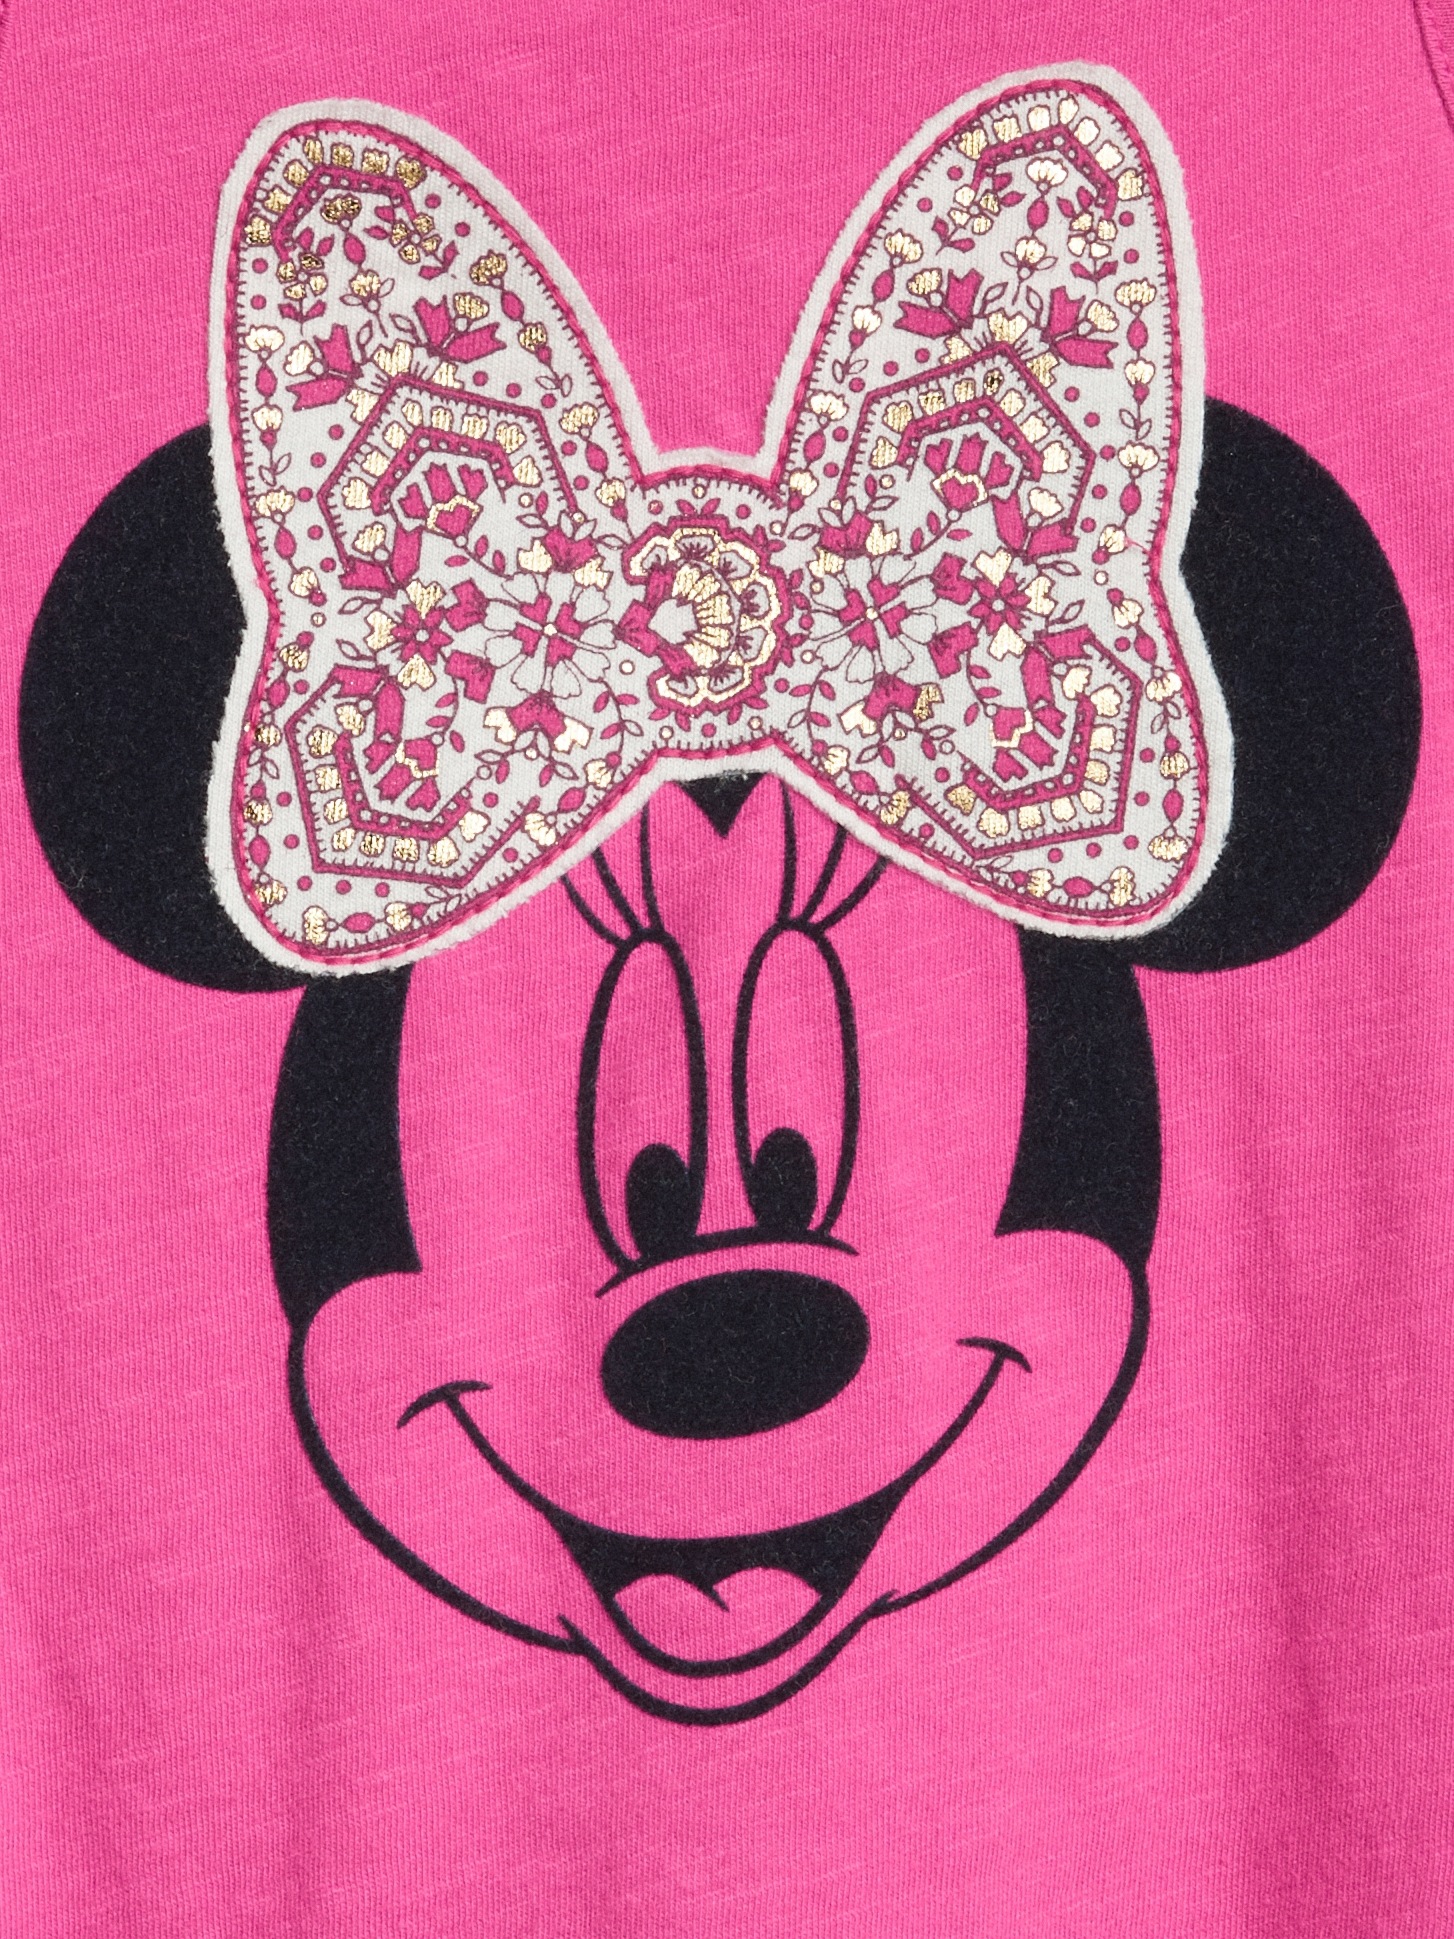 NWT $65, Sz 12m-18m baby Gap x Disney Minnie Mouse Tank Top Shirt Girl Set  of 3